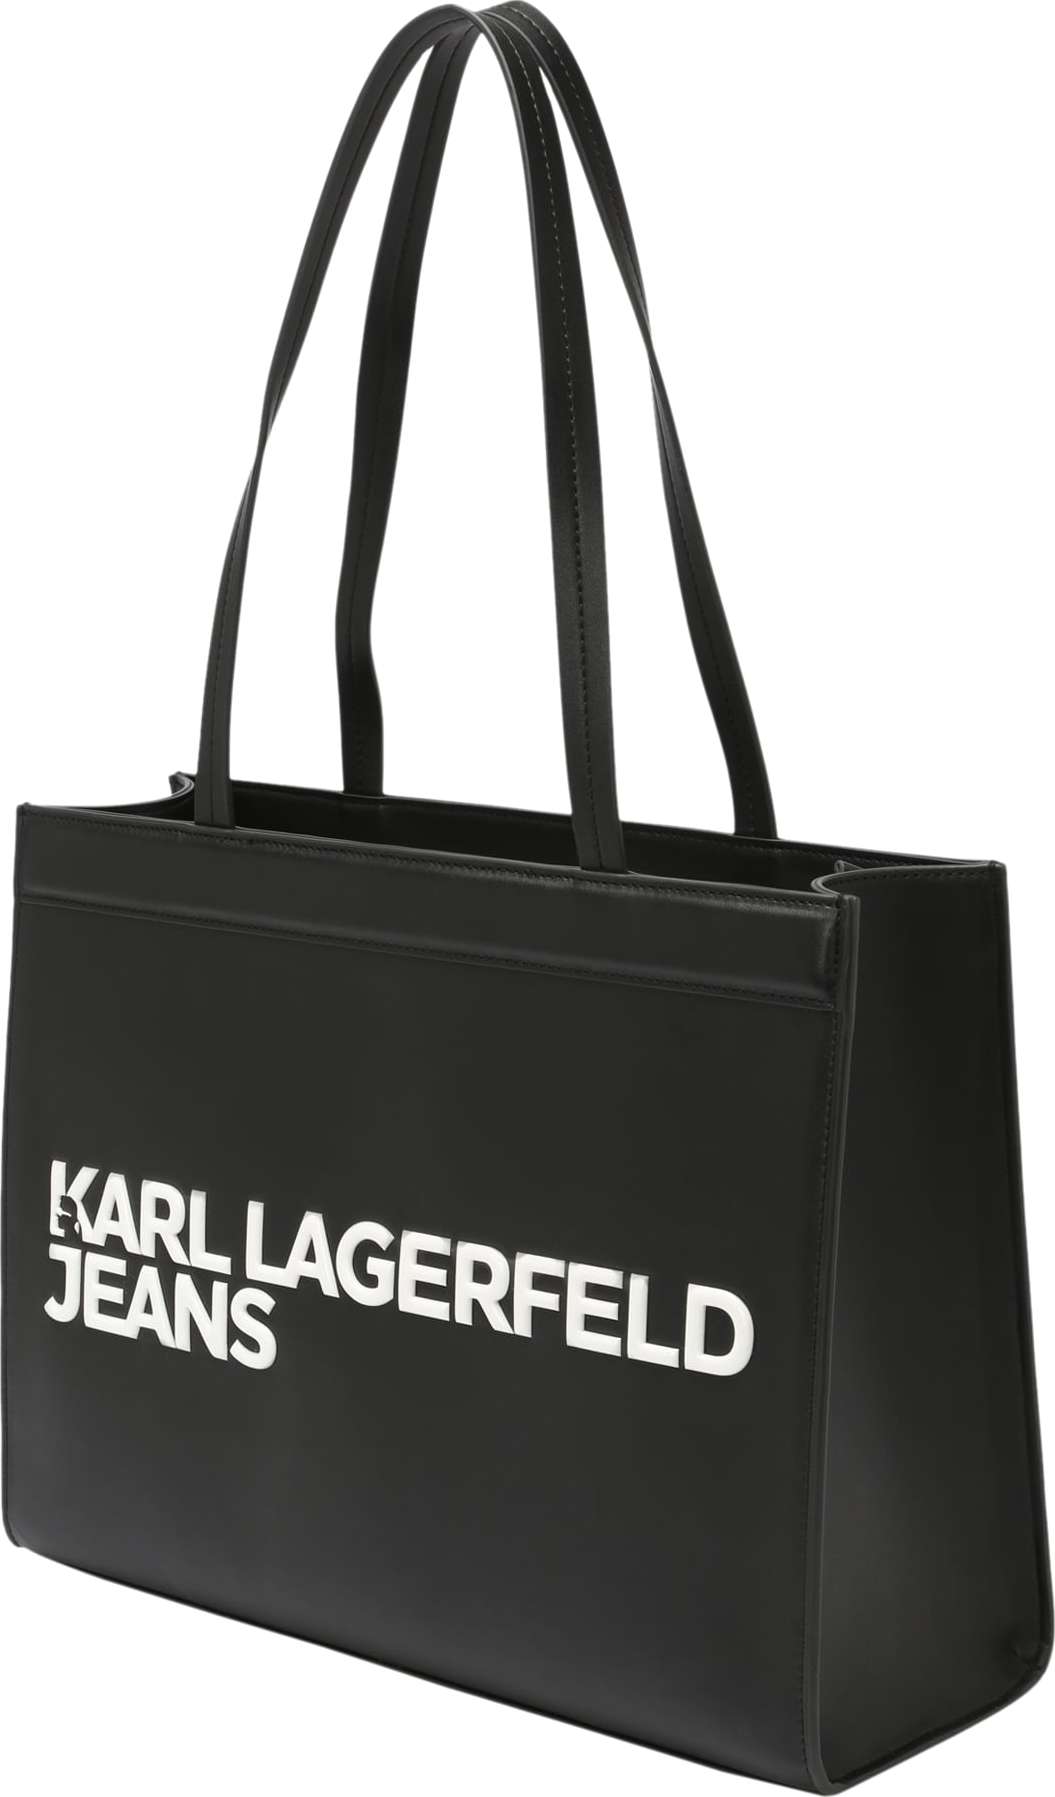 KARL LAGERFELD JEANS Nákupní taška černá / bílá